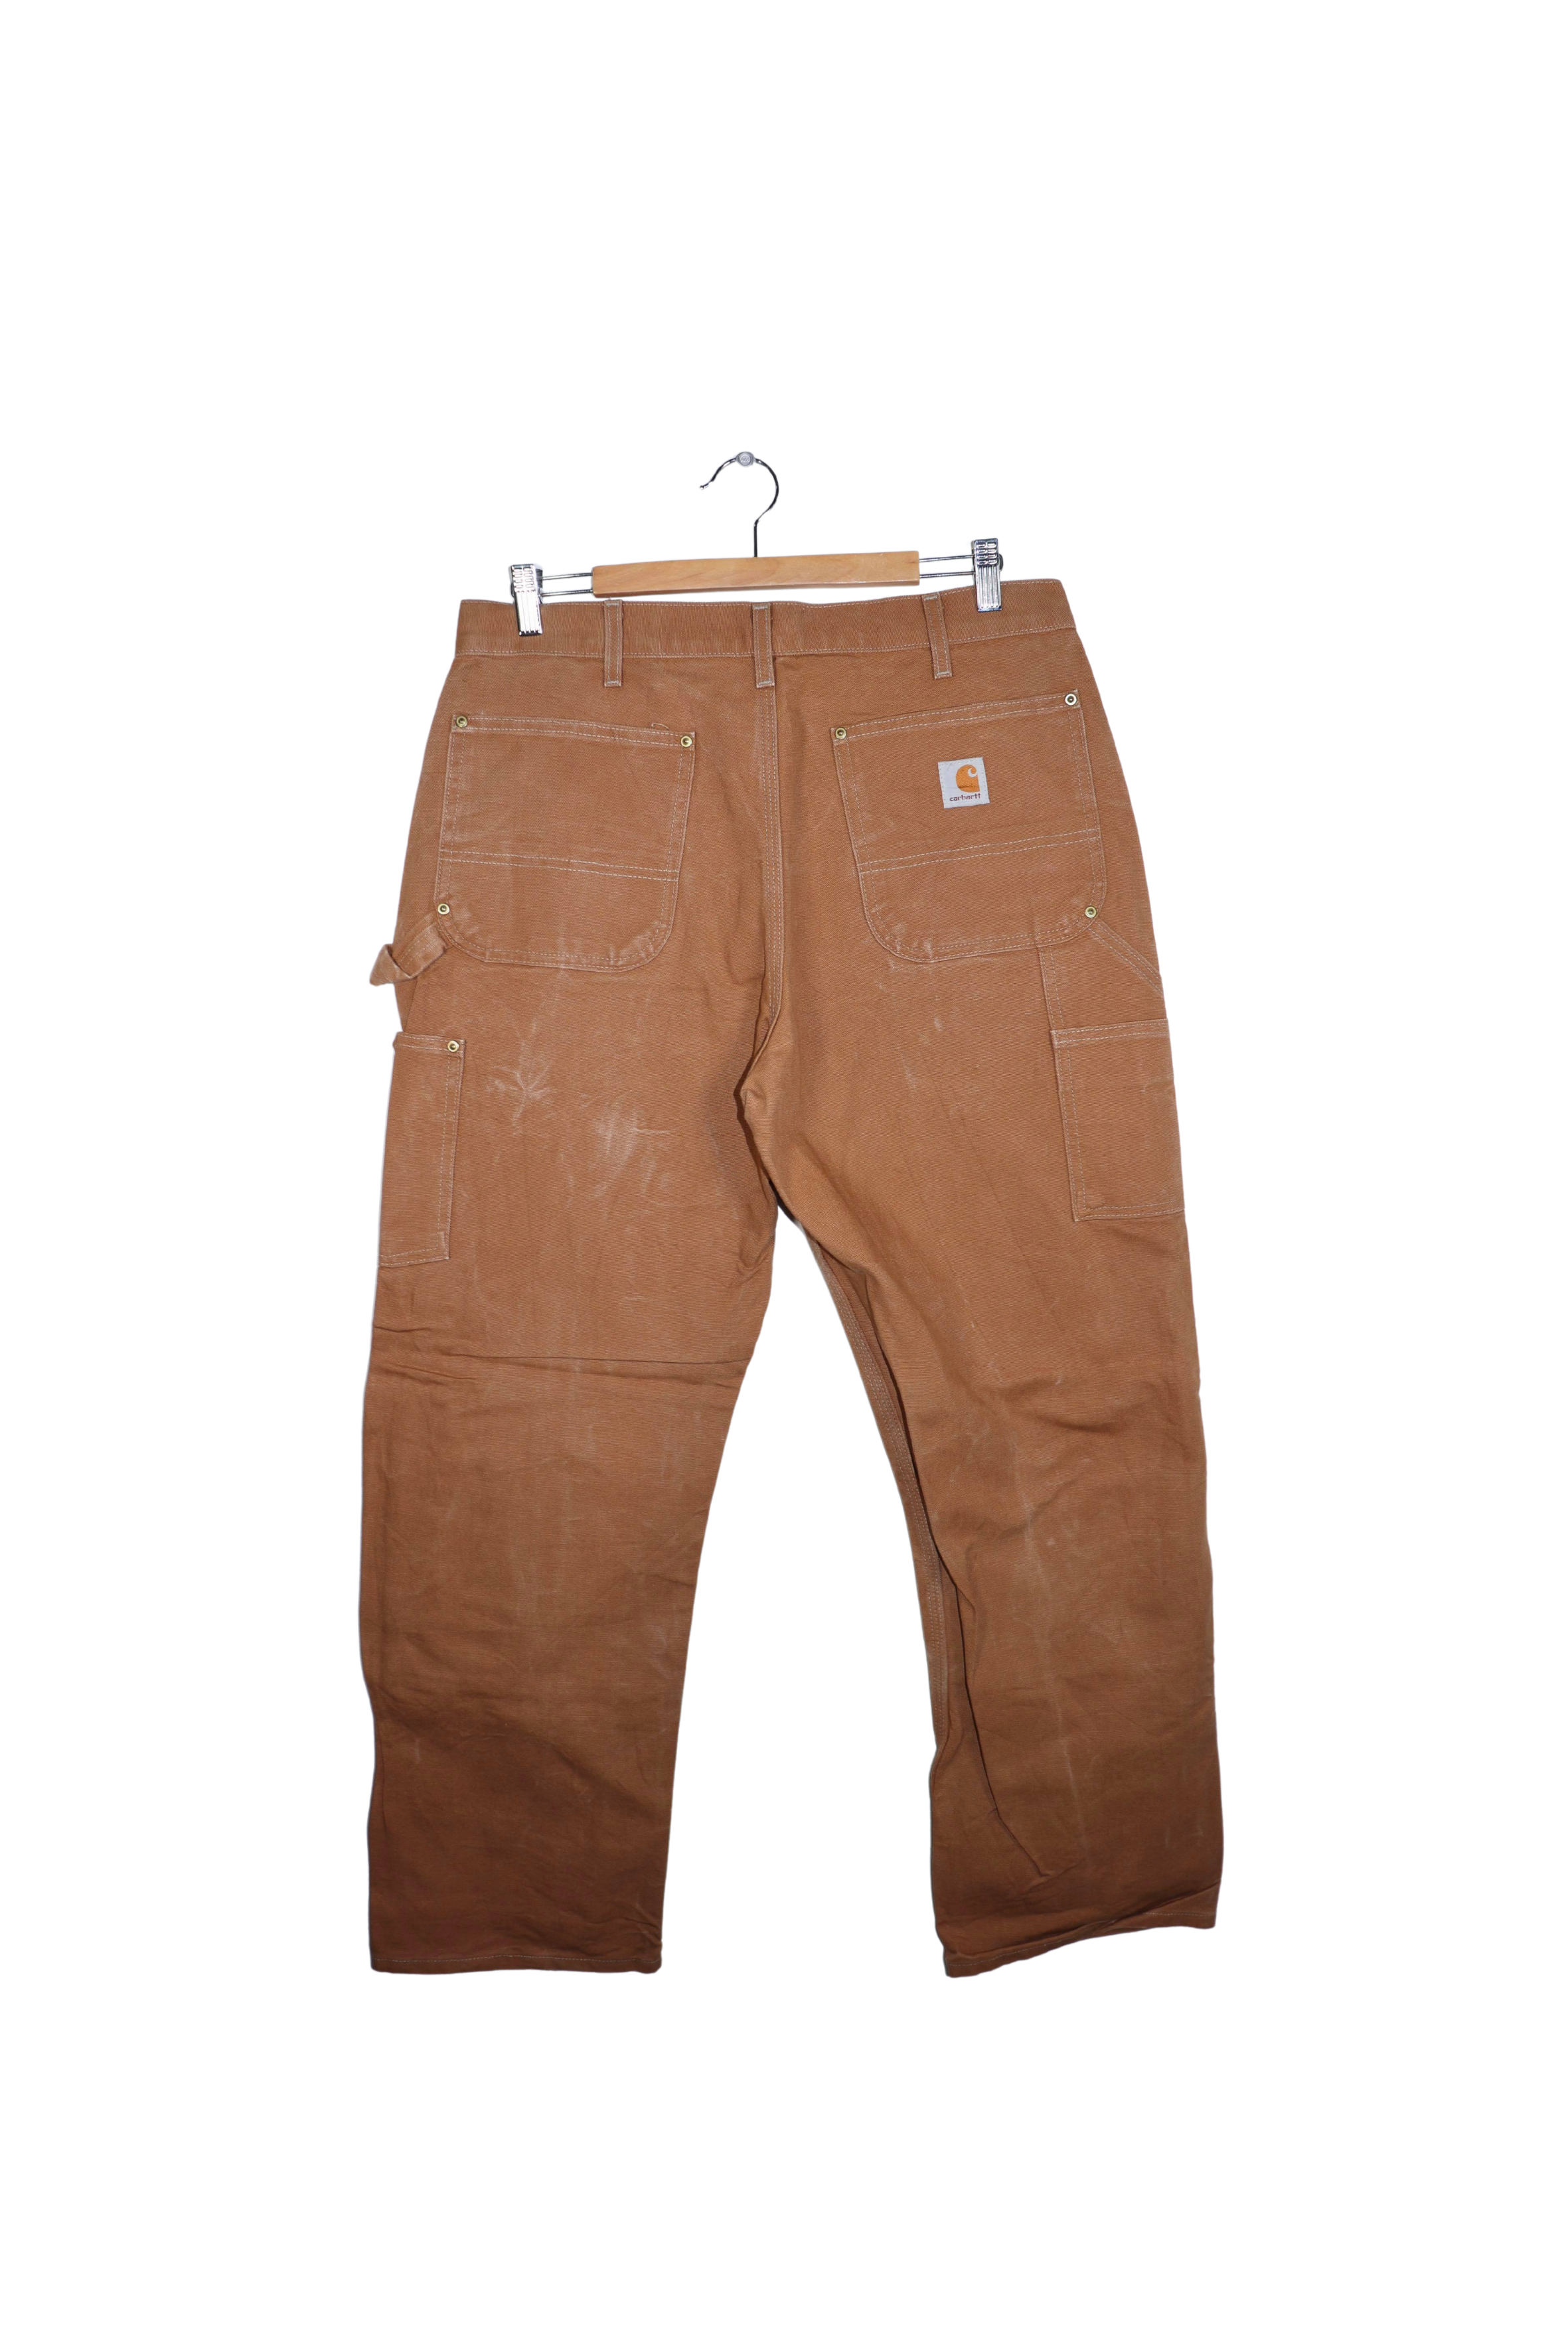 Vintage Carhartt Double Knee Thick Light Brown Carpenter Pants Size: 34 X 30